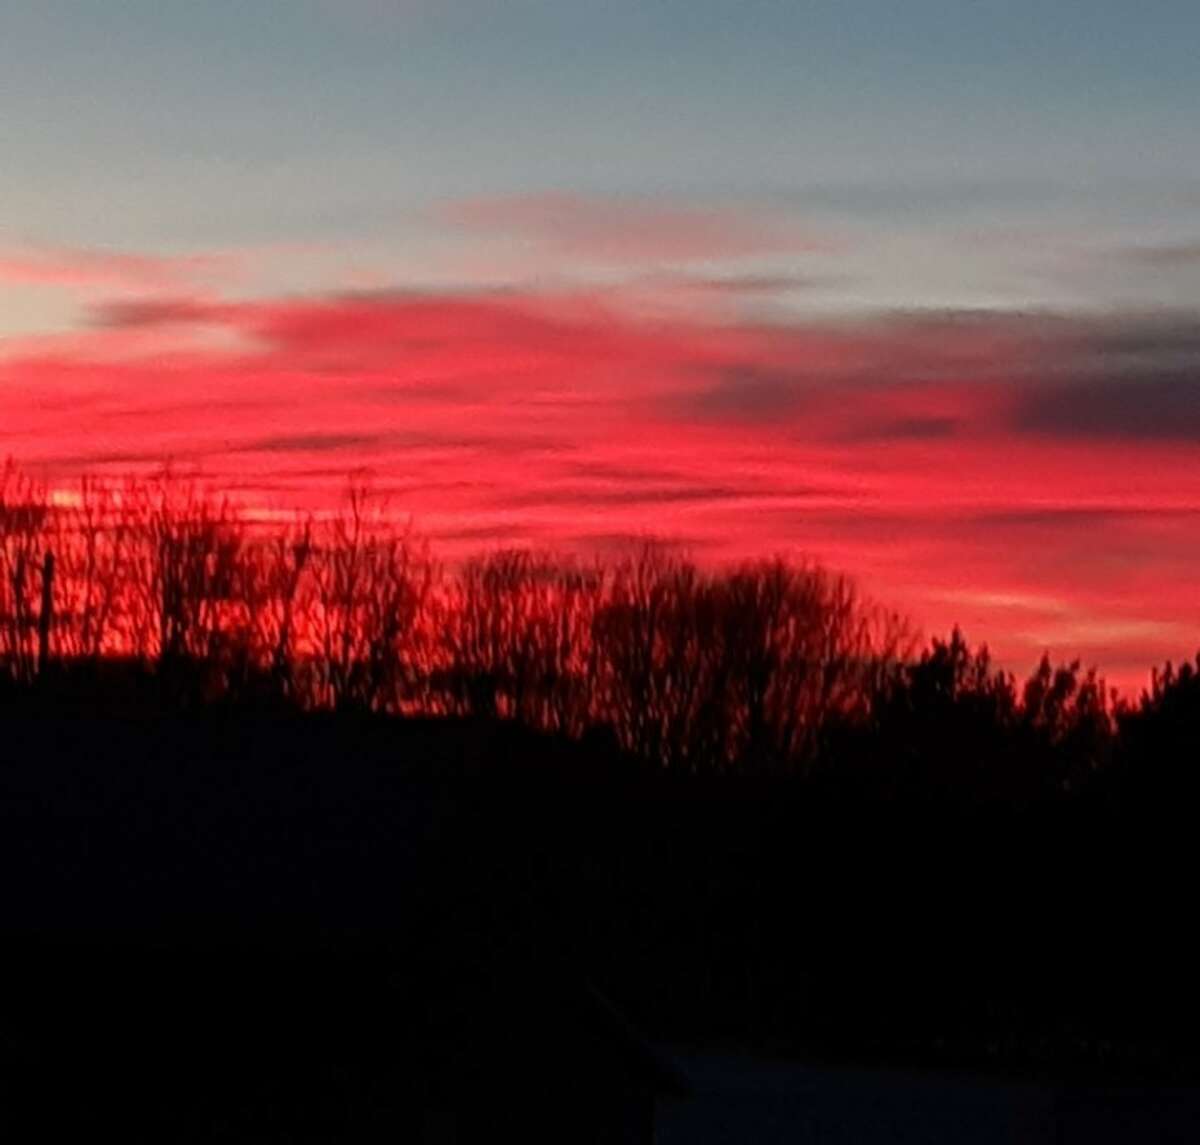 Lovina’s view of a Michigan sunset.